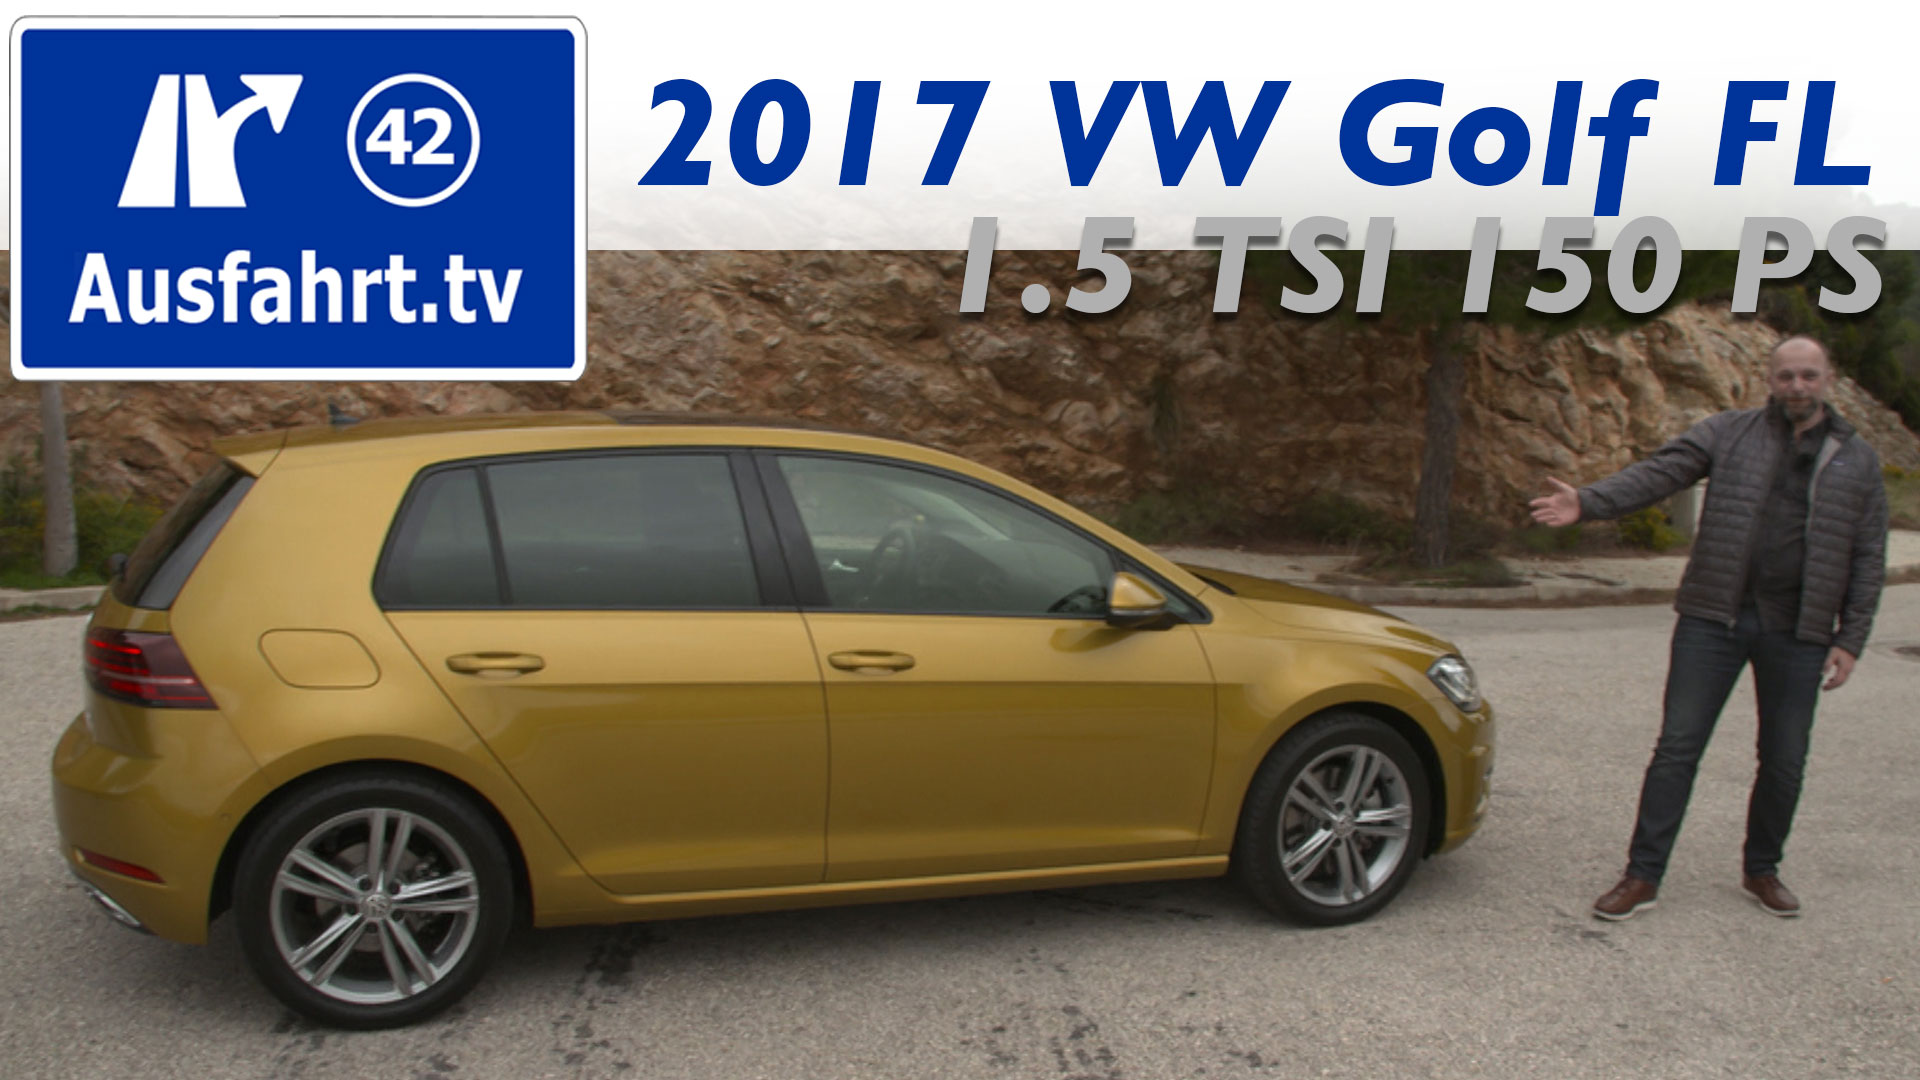 2017 Volkswagen Golf 1.5 TSI 150 PS MoPf Facelift Update